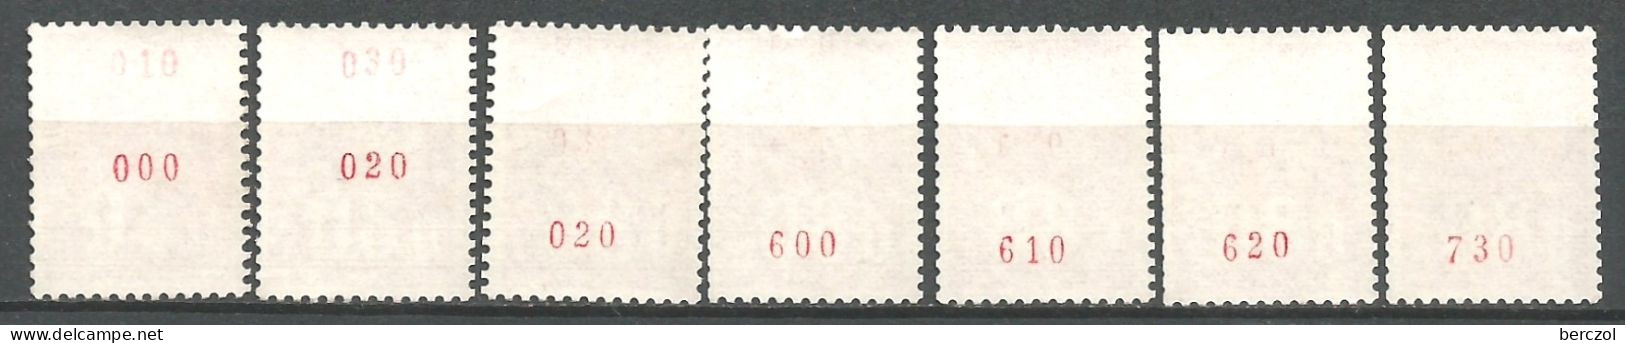 FRANCE ANNEE 1974  N° 1816c X7 NEUF** MNH TB COTE 175,00 €  - Ungebraucht